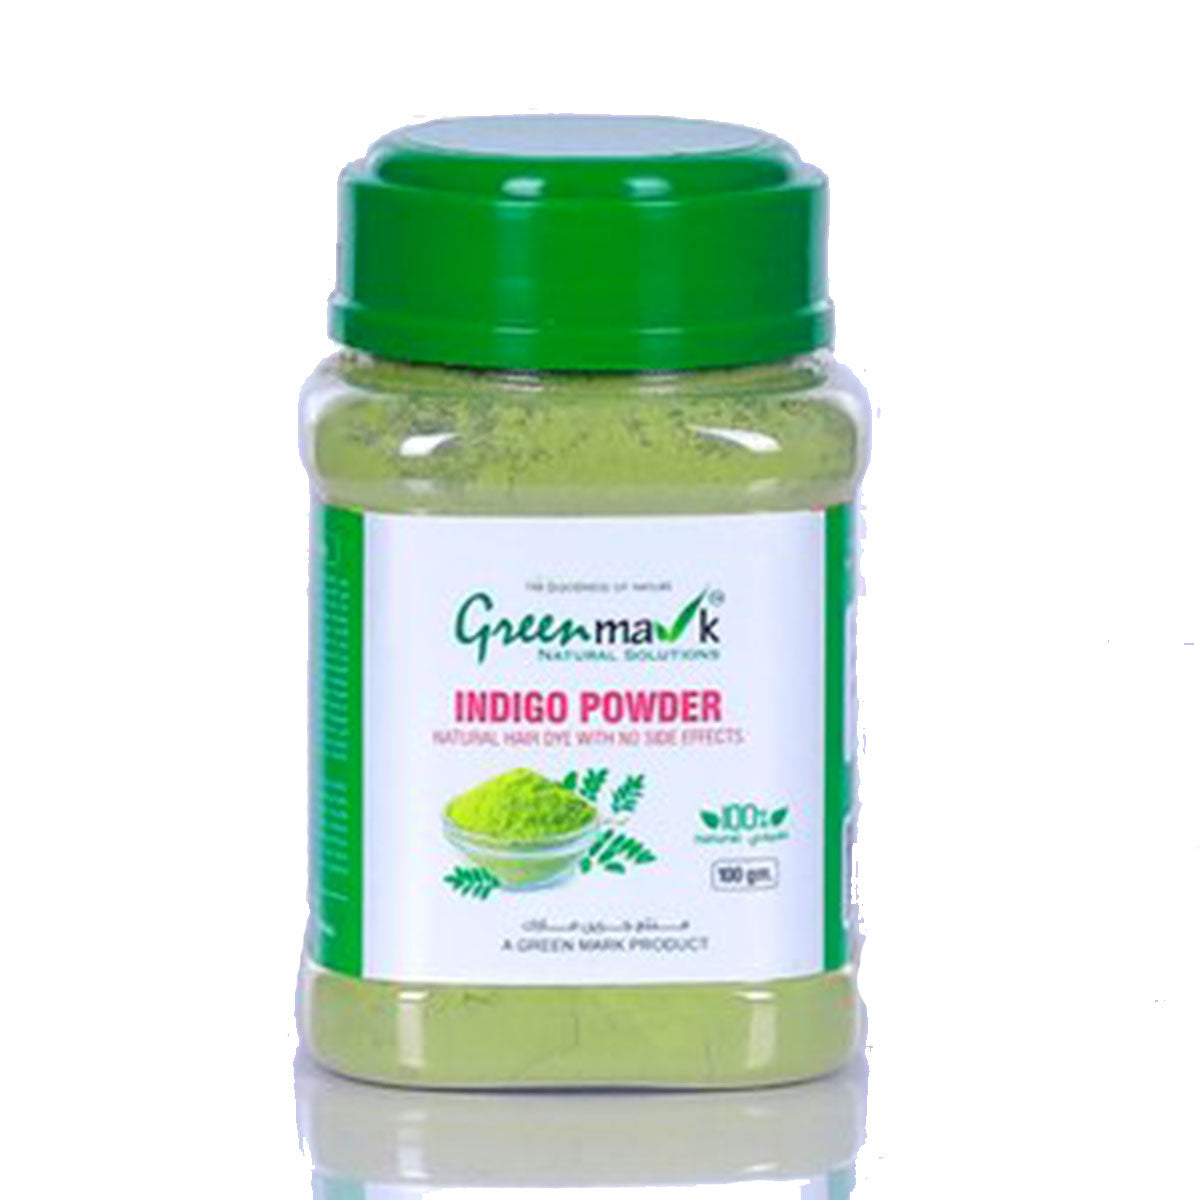 Greenmark Natural Solution Indigo Powder 100g